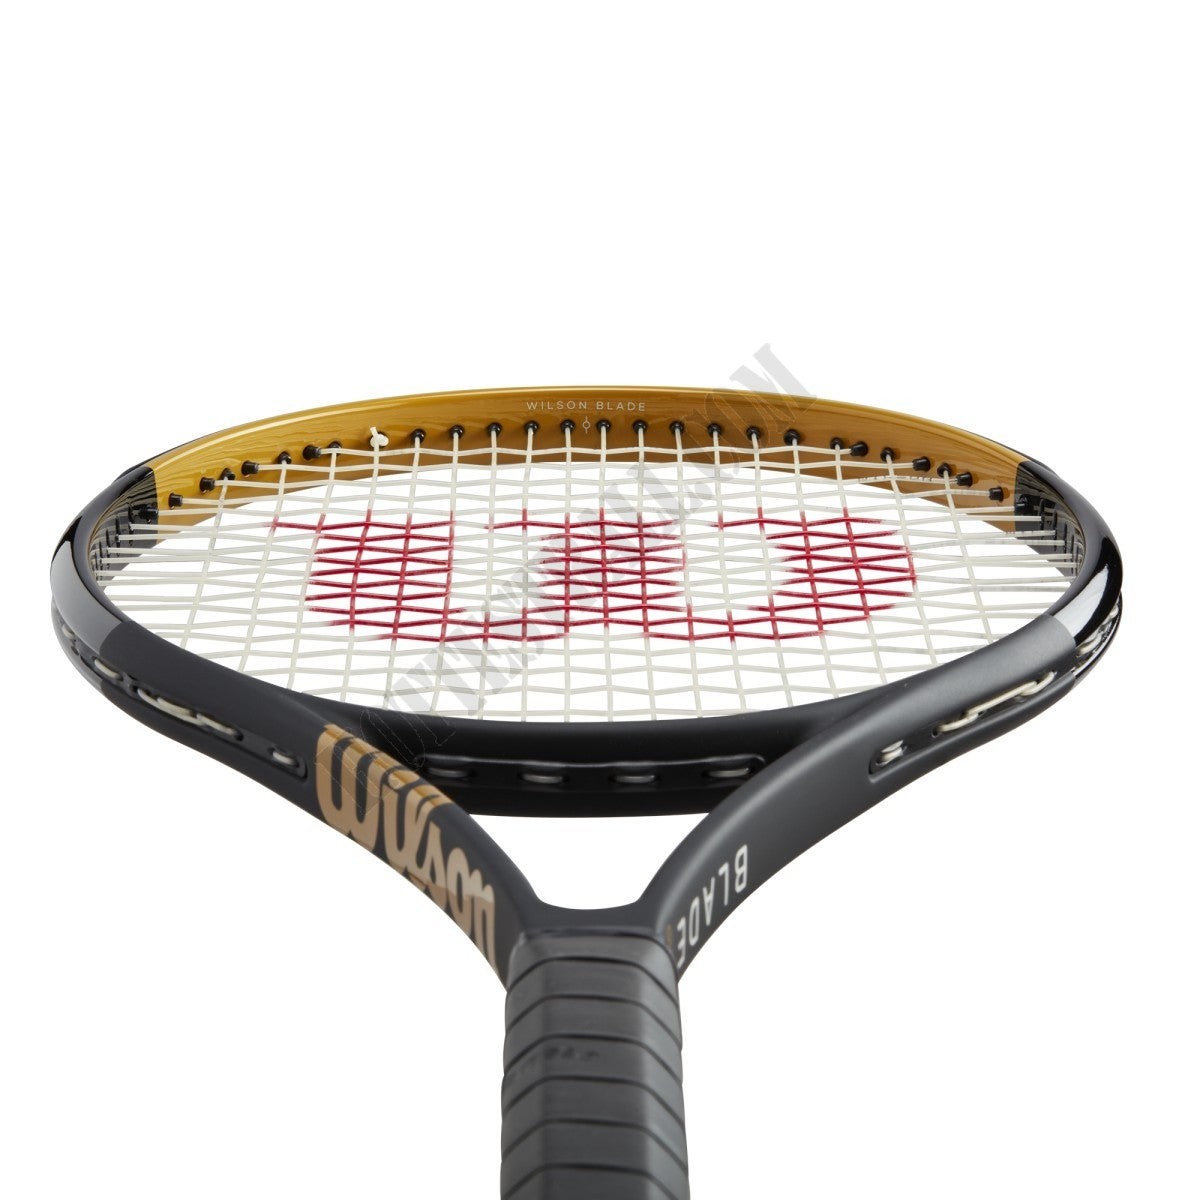 Blade SW102 Autograph Tennis Racket - Wilson Discount Store - -2